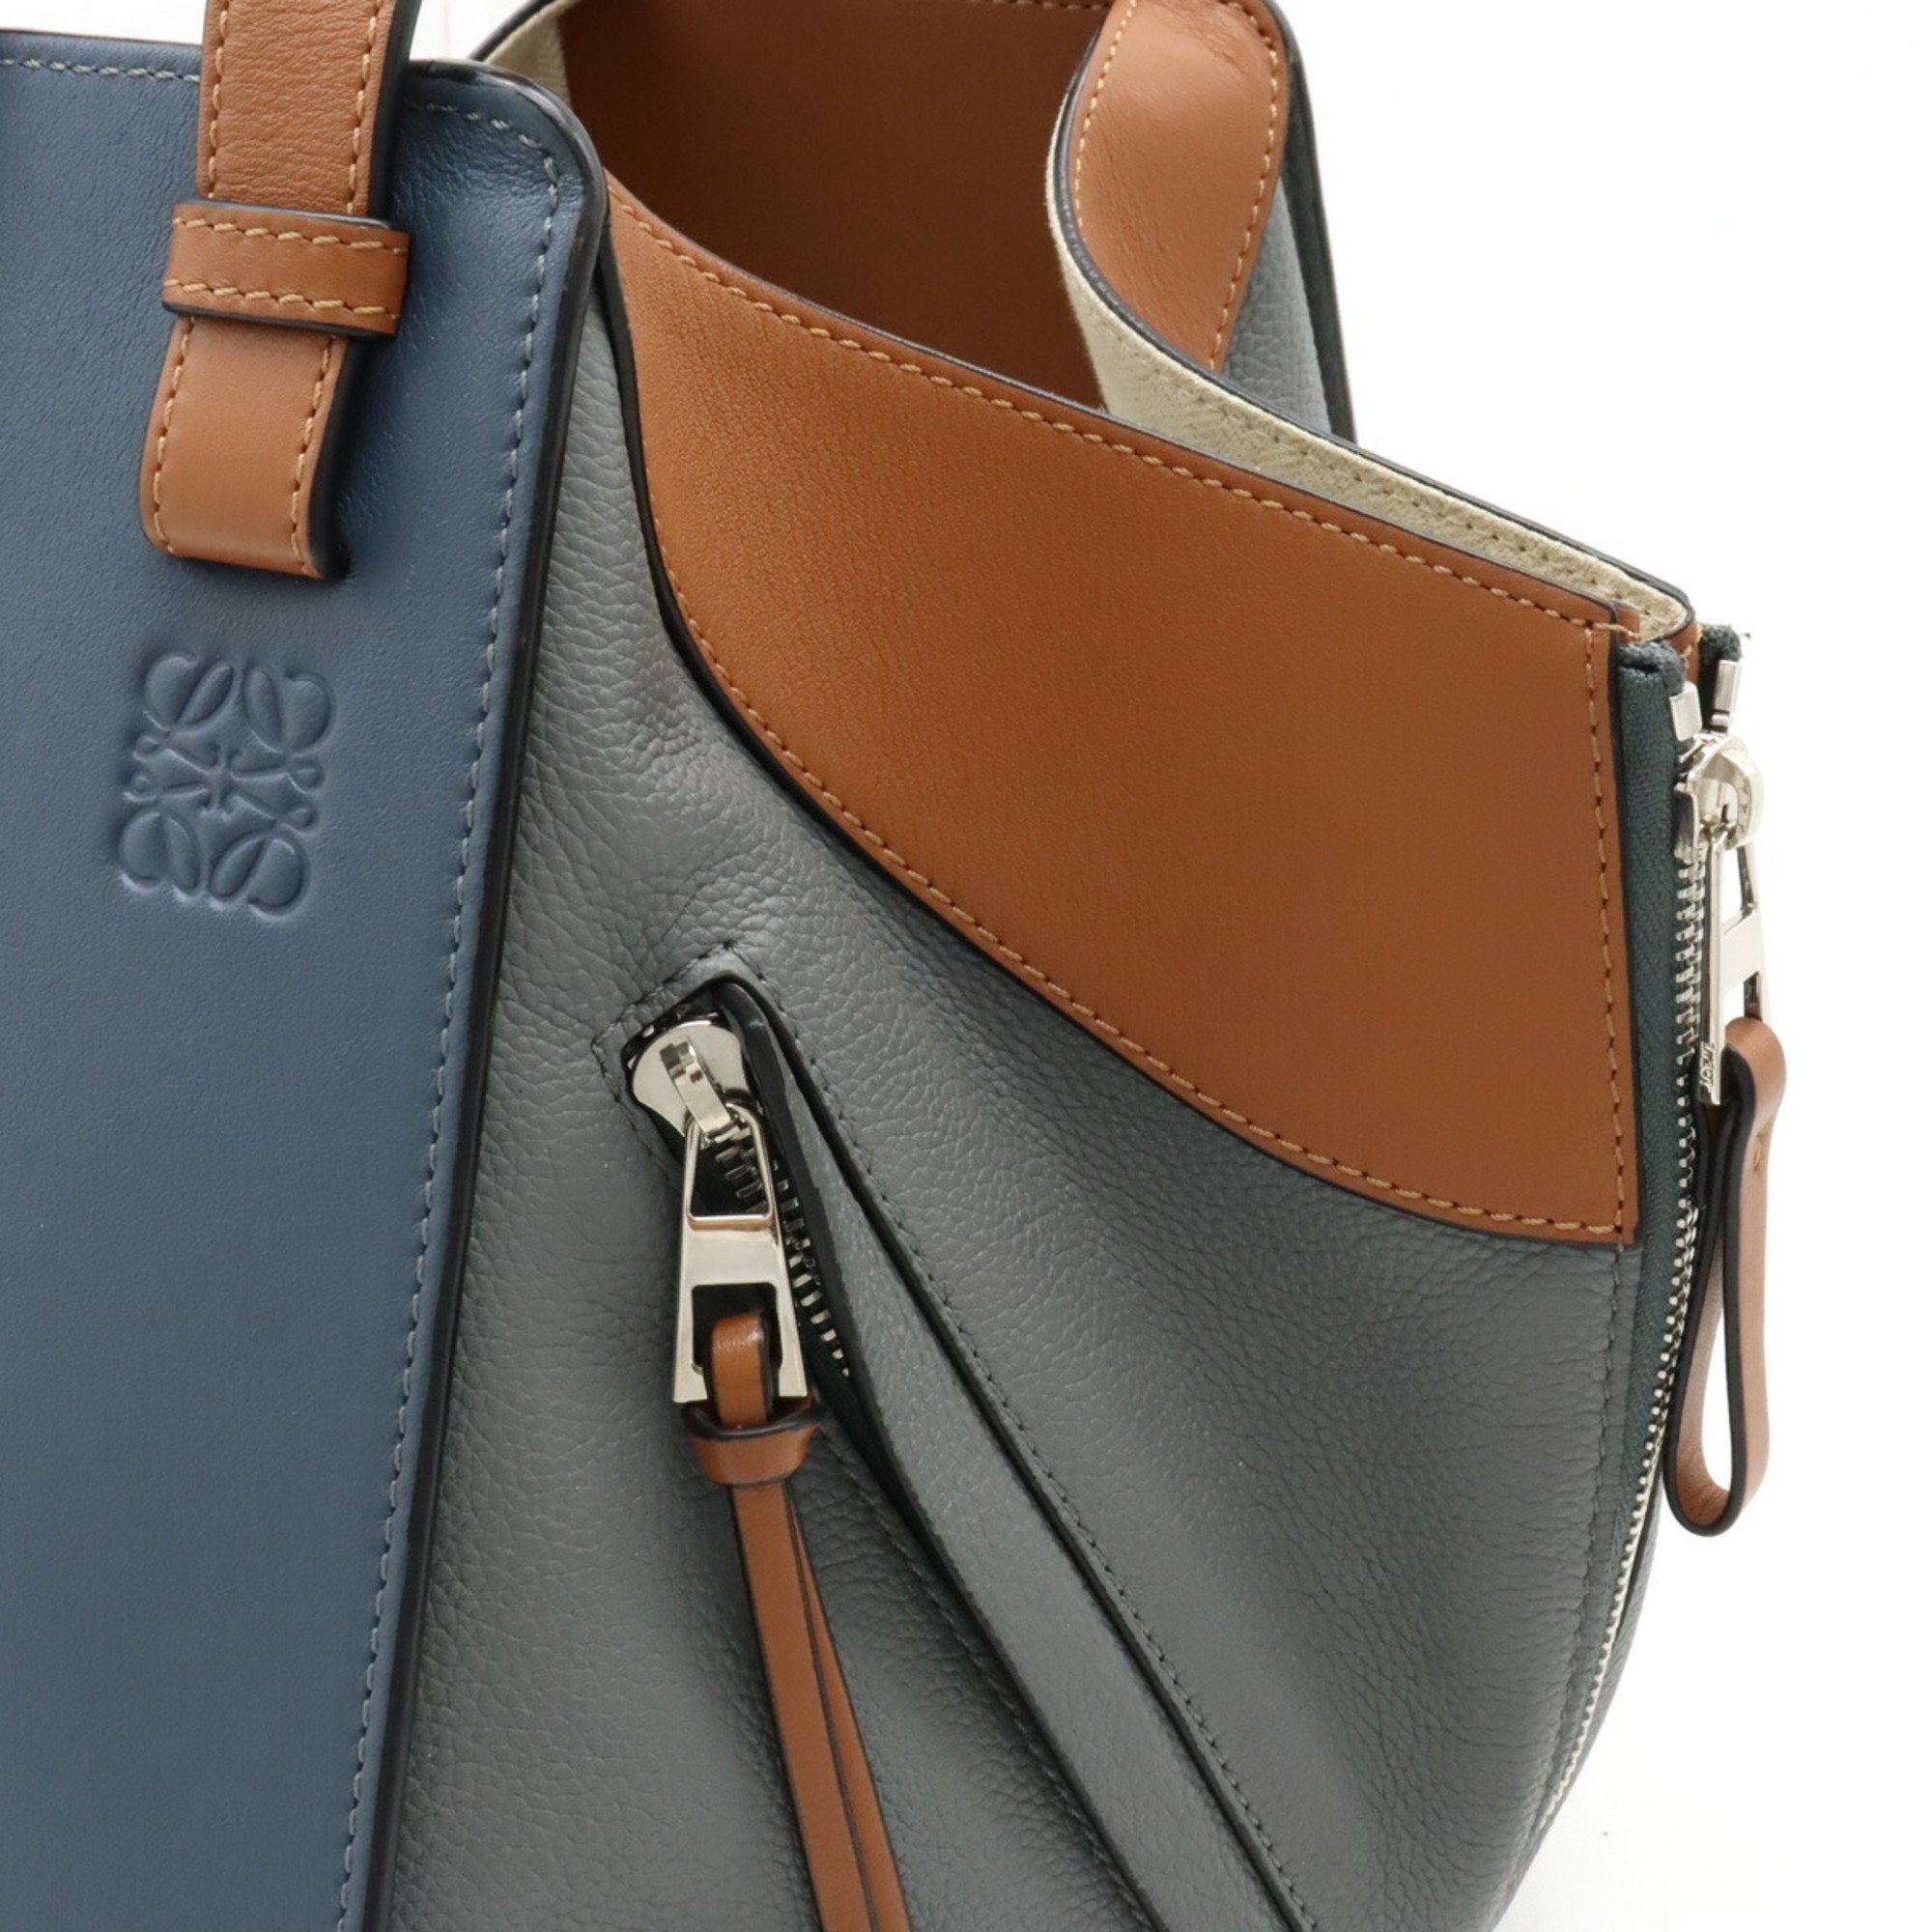 LOEWE Hammock Bag Small Handbag Shoulder 6WAY Leather Tan Blue Light